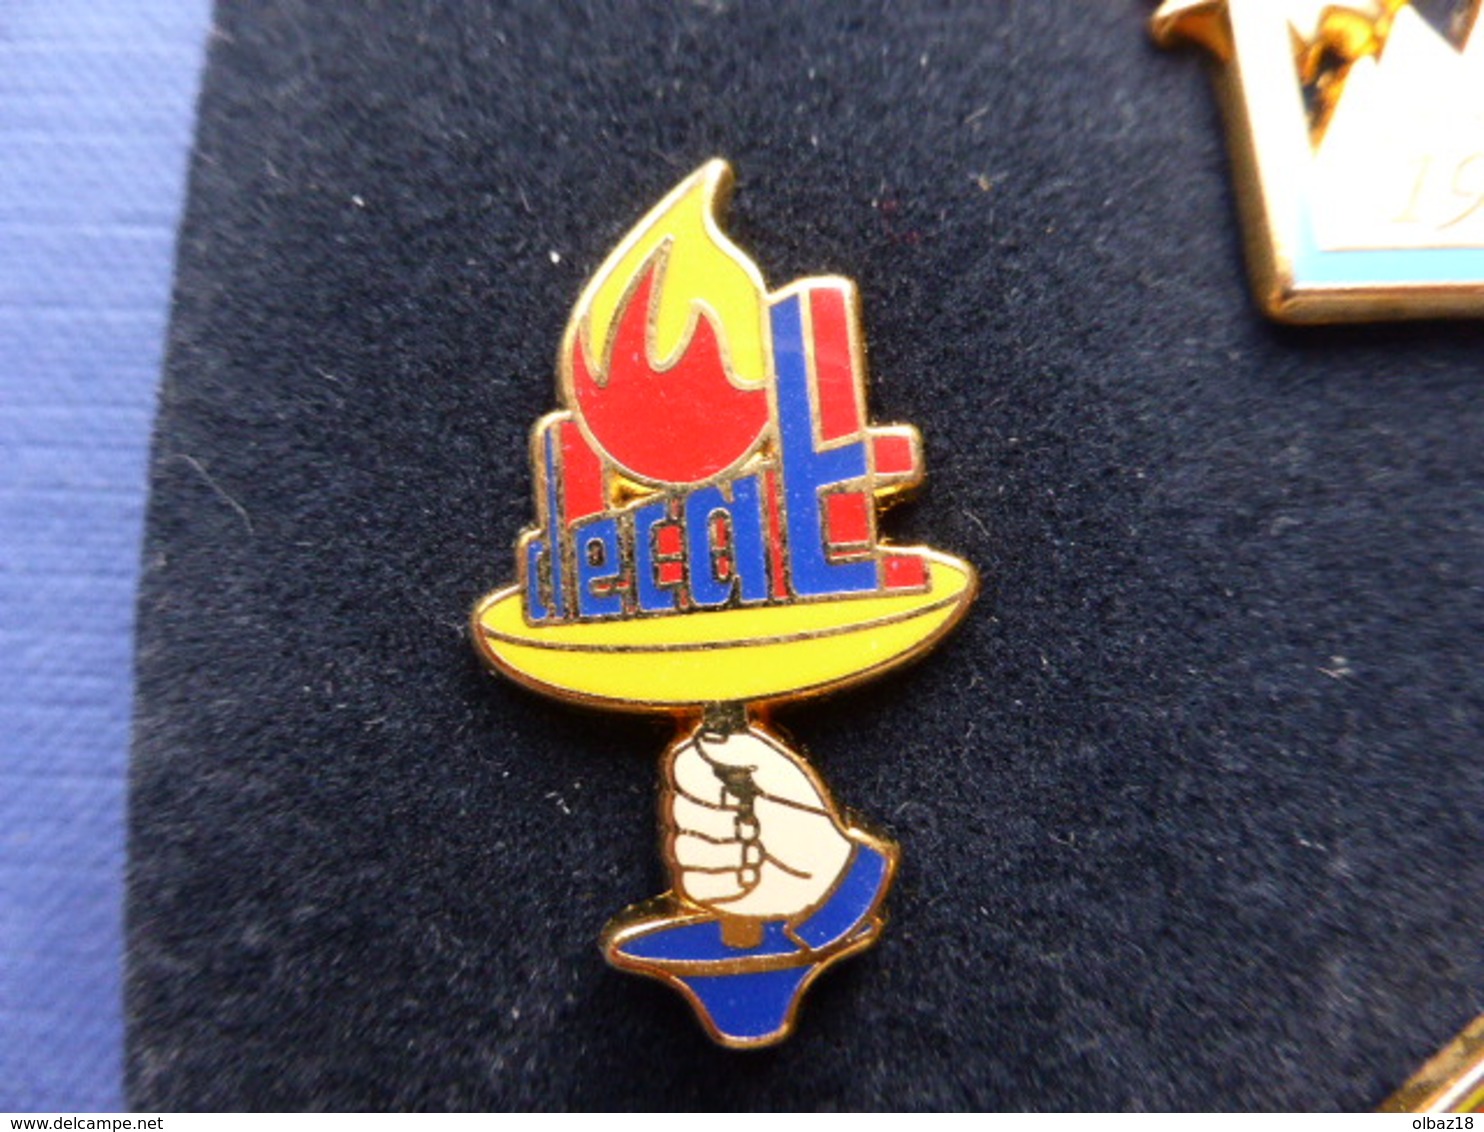 Coffret 6 Pin's Decat - Jeux Olympiques d'hiver 92 - JO Albertville 1992 - zamac fabricant - pin's sur pin's